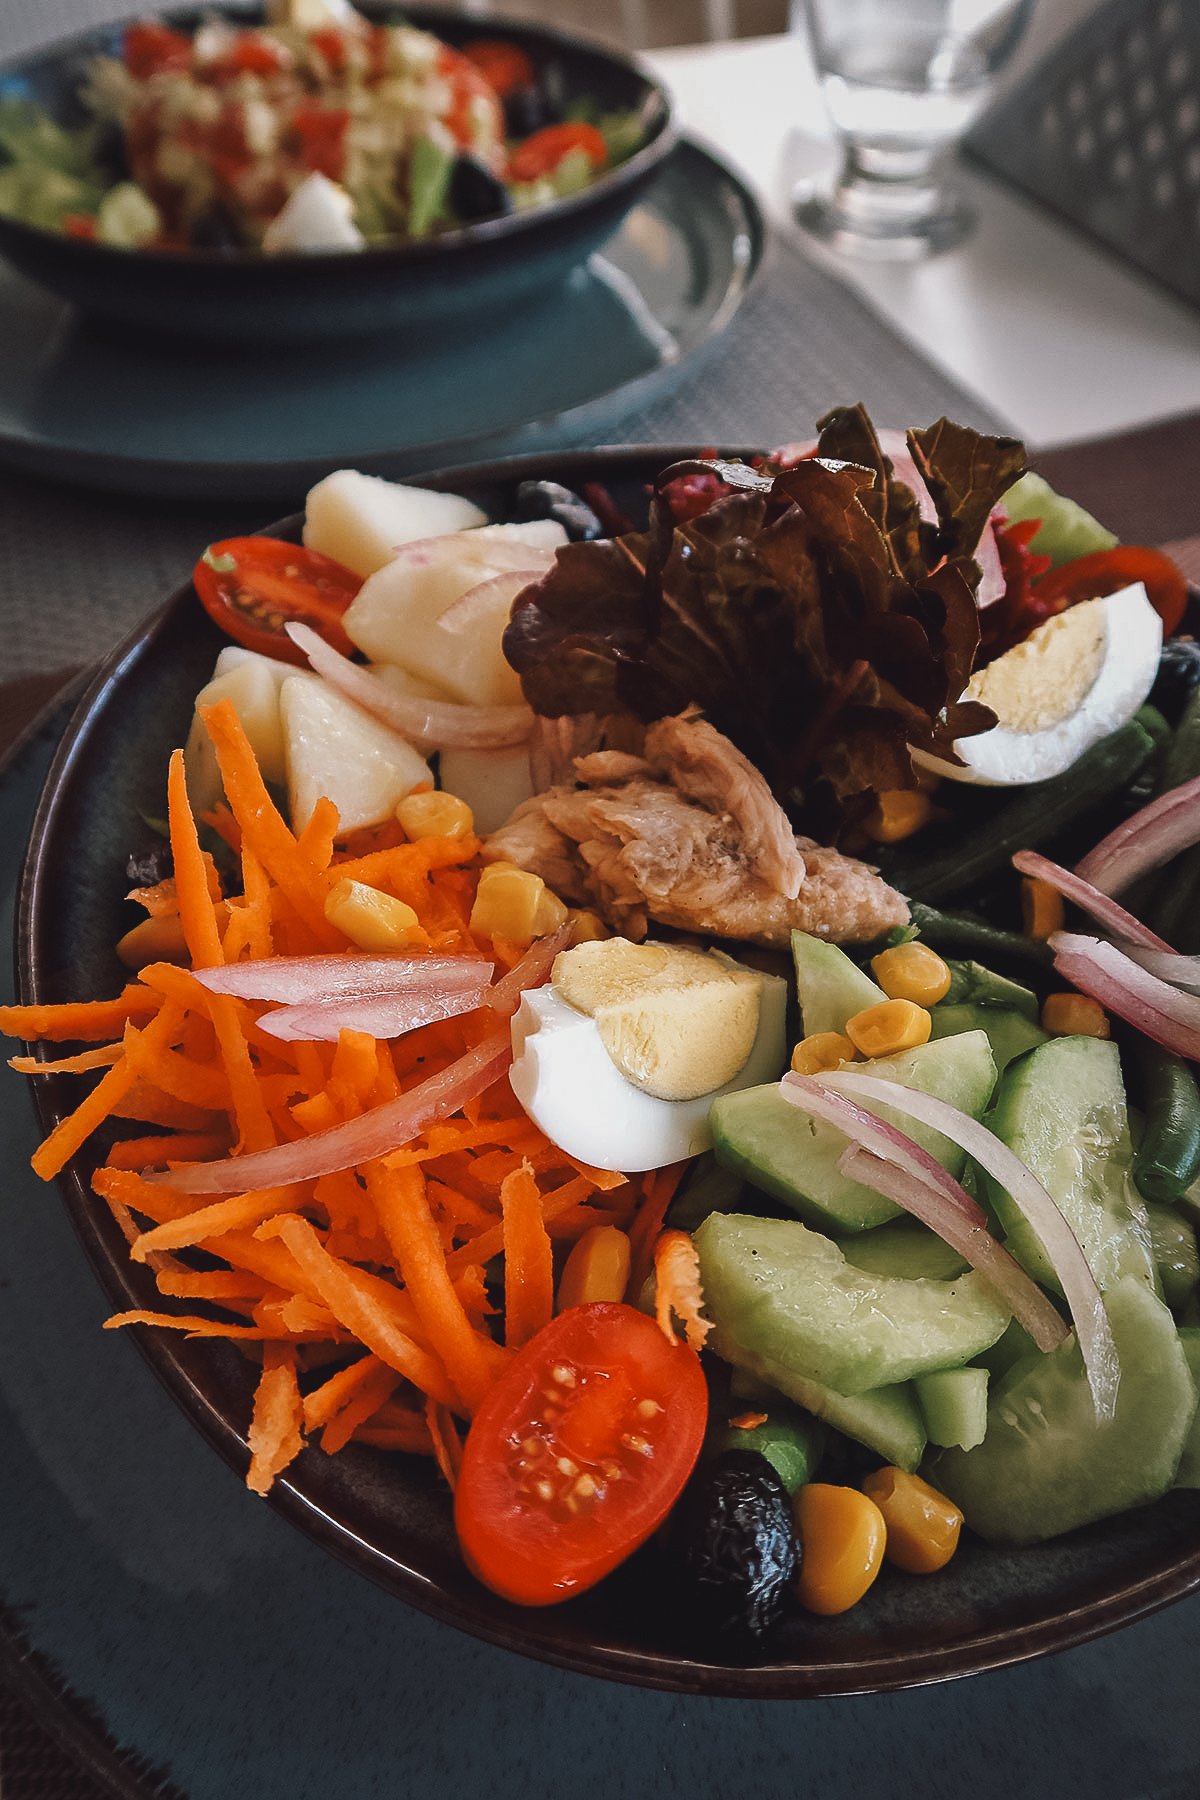 Salad nicoise at a restaurant in Rabat